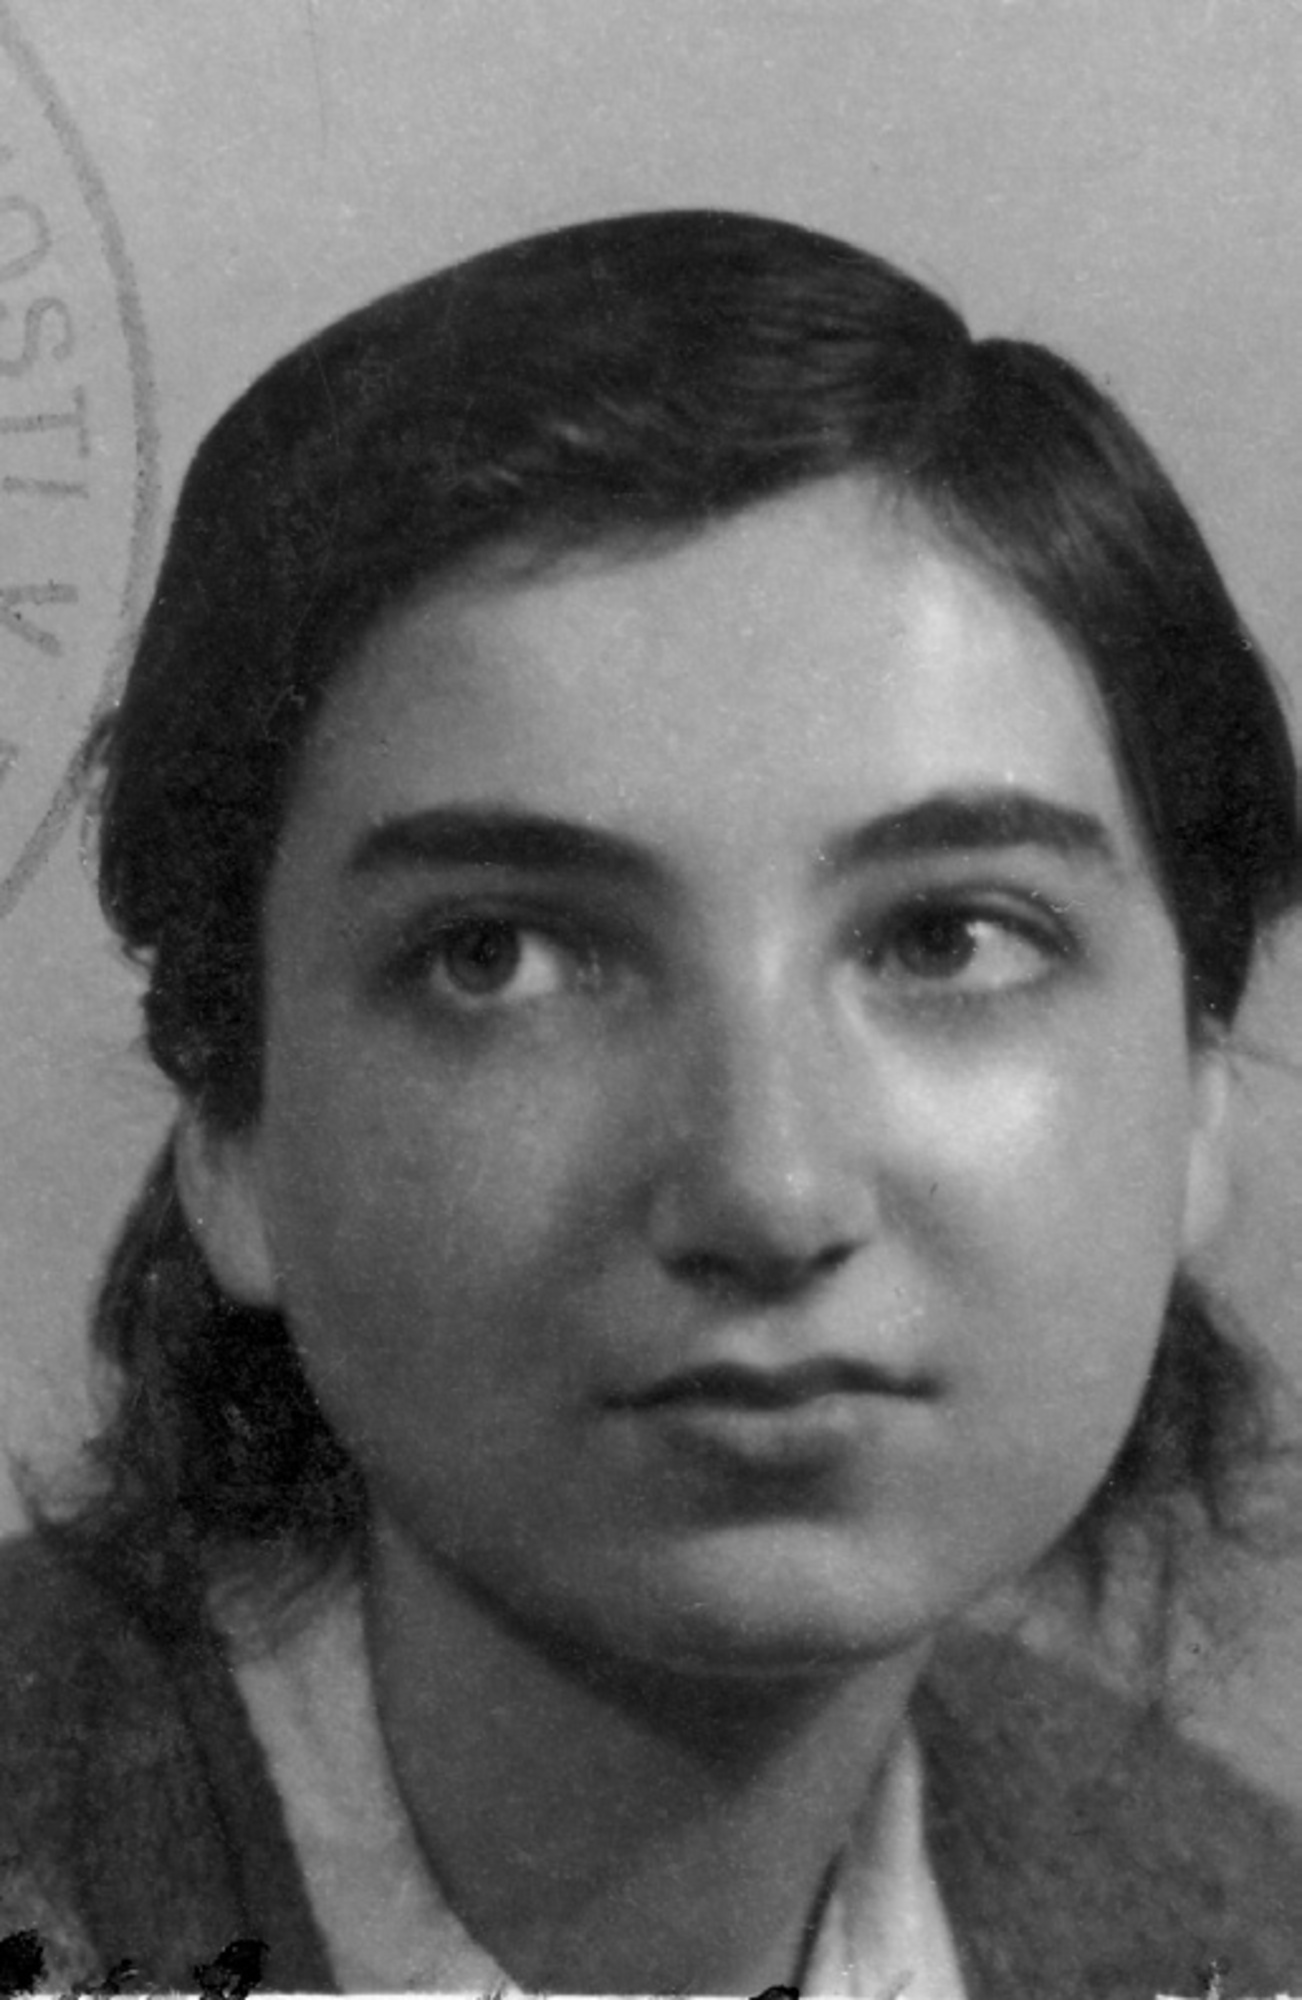 Hana Bořkovcová in 1945 on a picture from her repatriation card